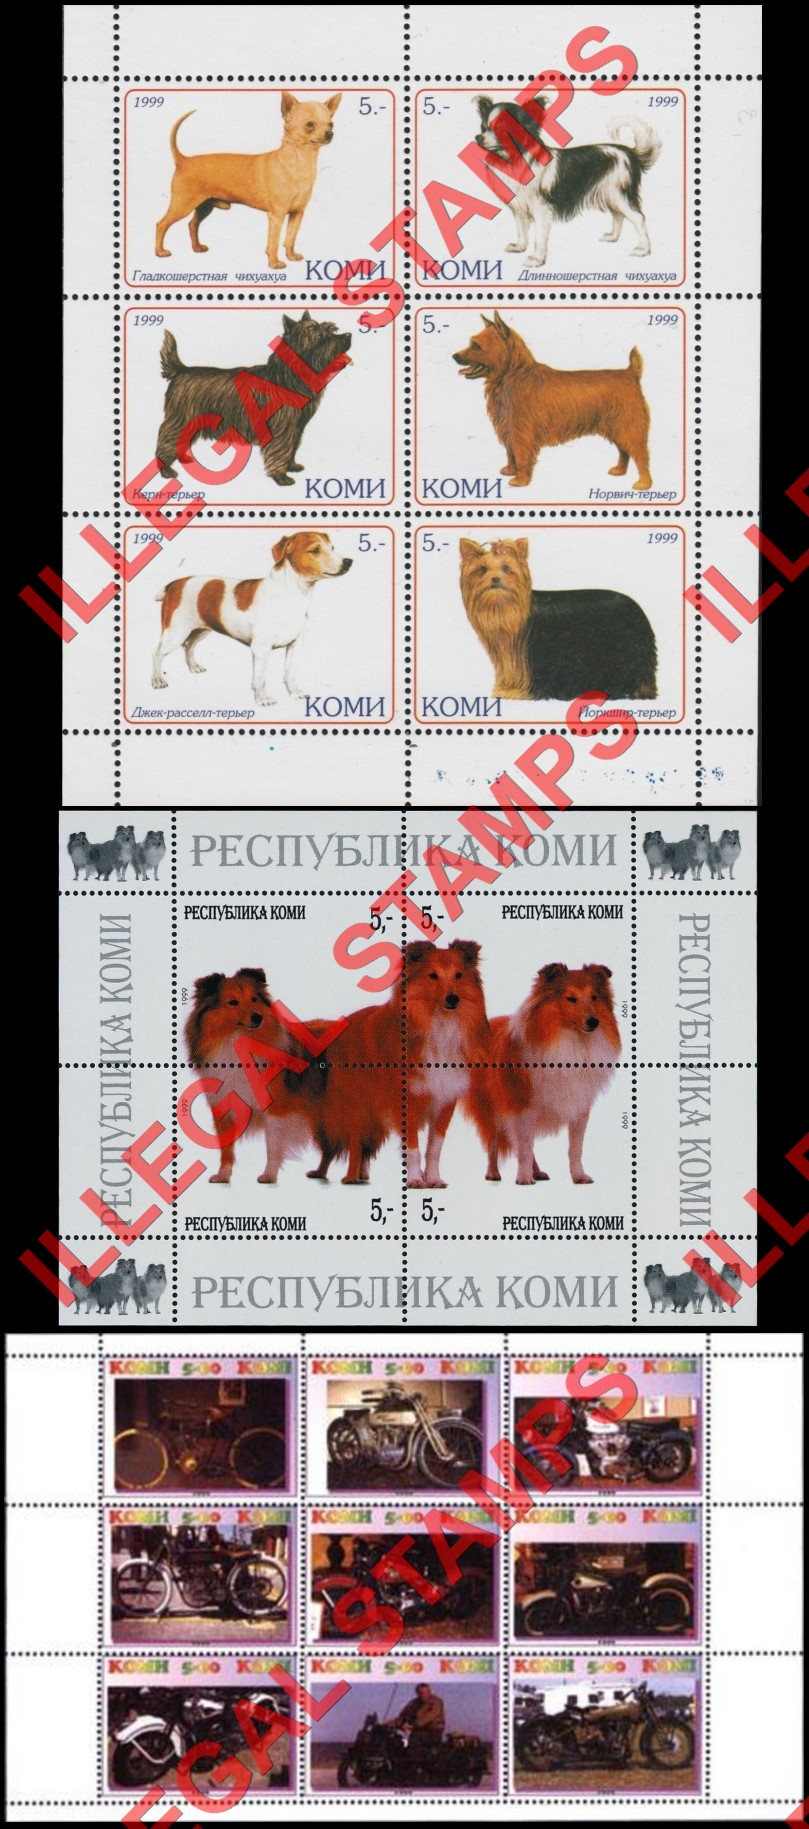 Komi Republic 1999 Counterfeit Illegal Stamps (Part 2)